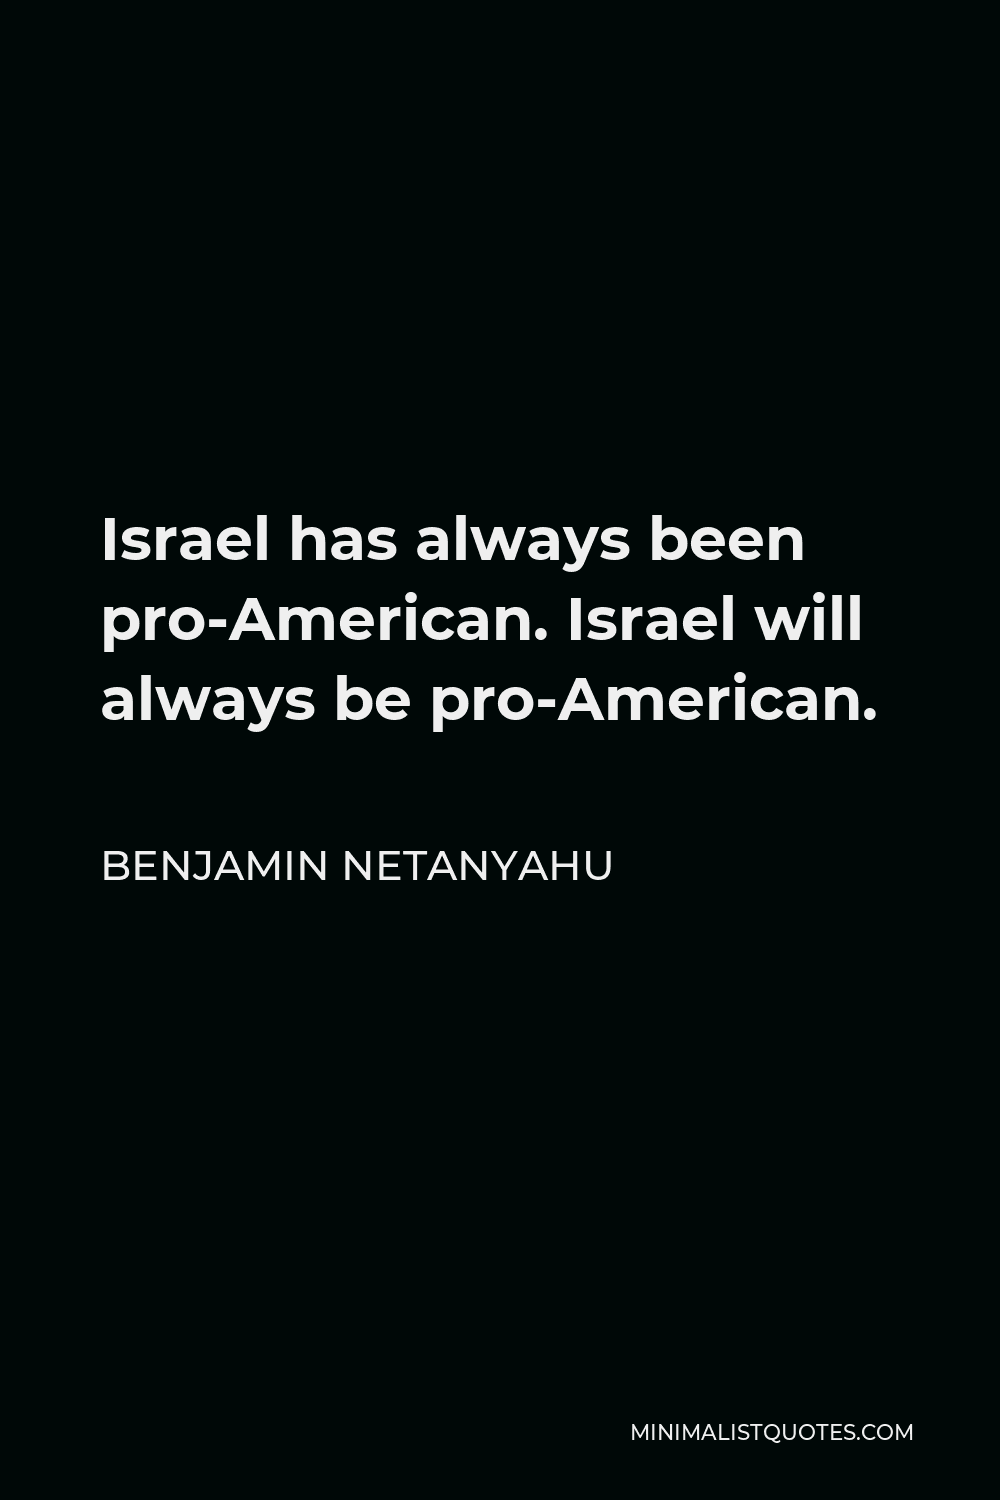 Benjamin Netanyahu Quote - Israel has always been pro-American. Israel will always be pro-American.